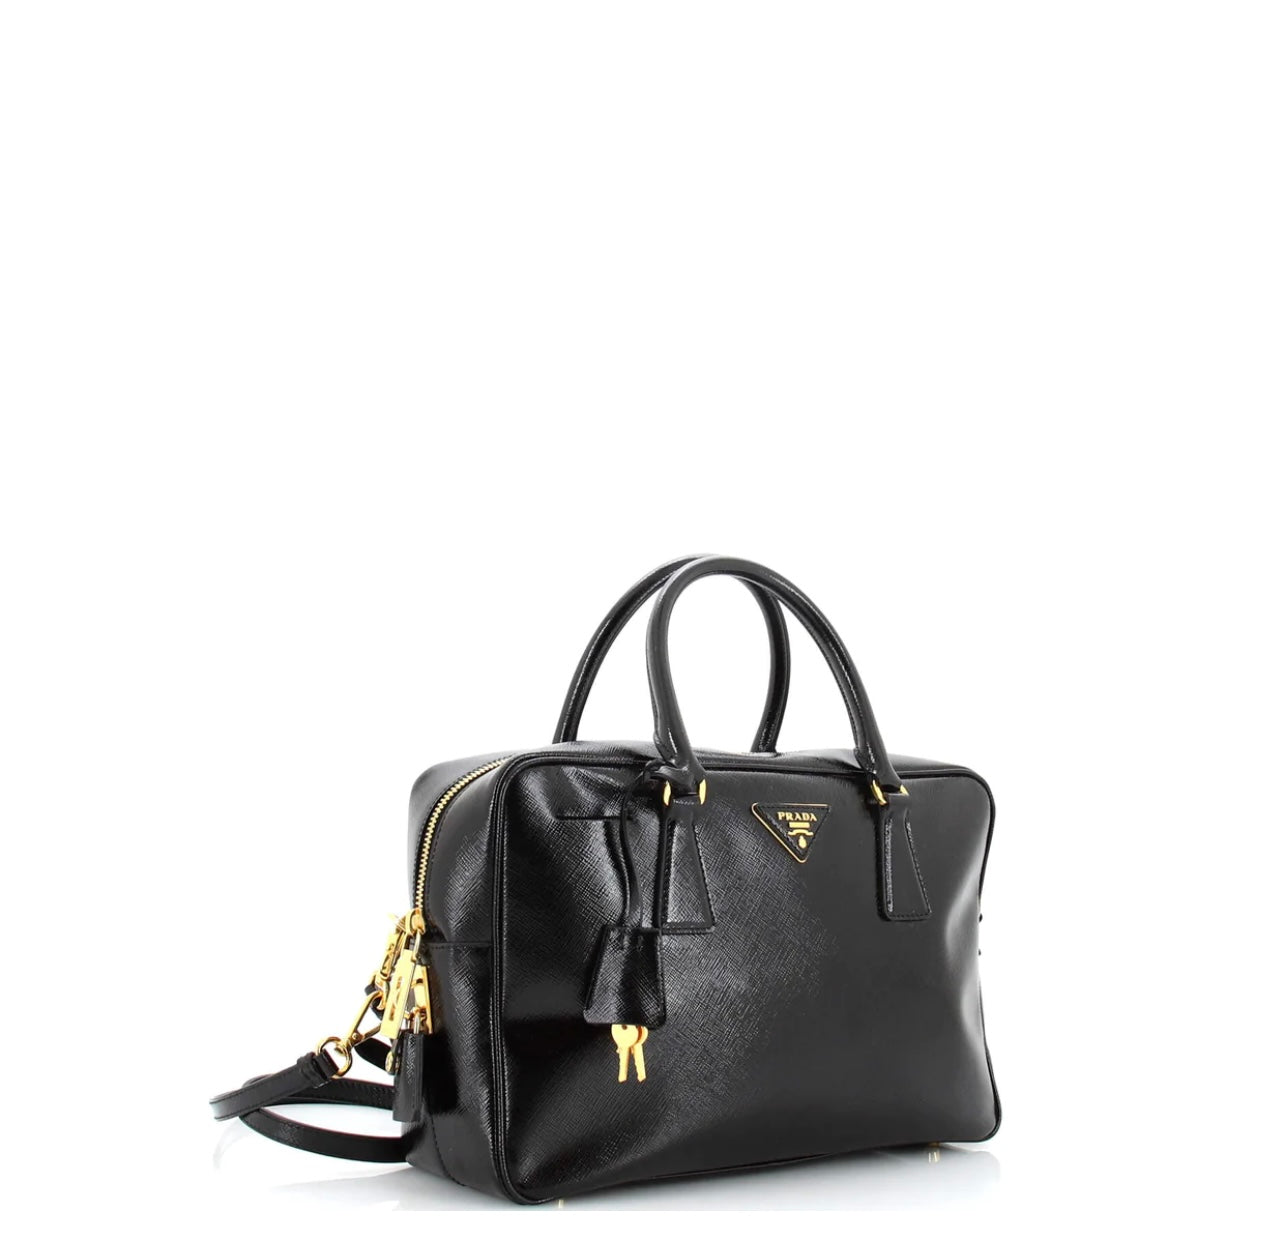 PRADA - Bauletto Bag Vernice Saffiano Leather